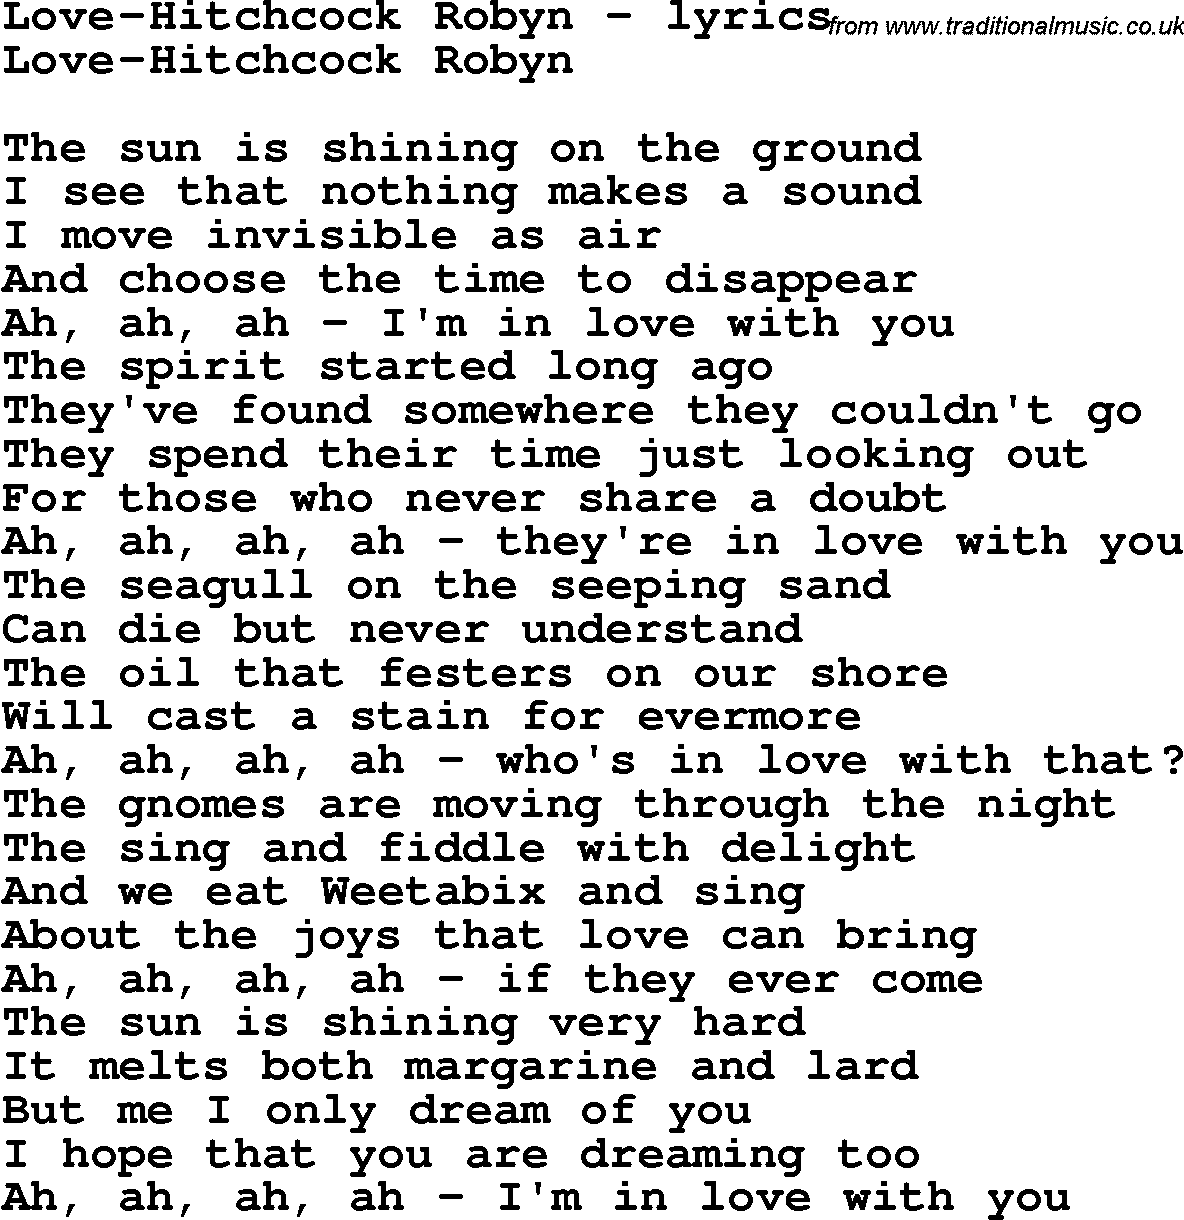 Love Song Lyrics for: Love-Hitchcock Robyn